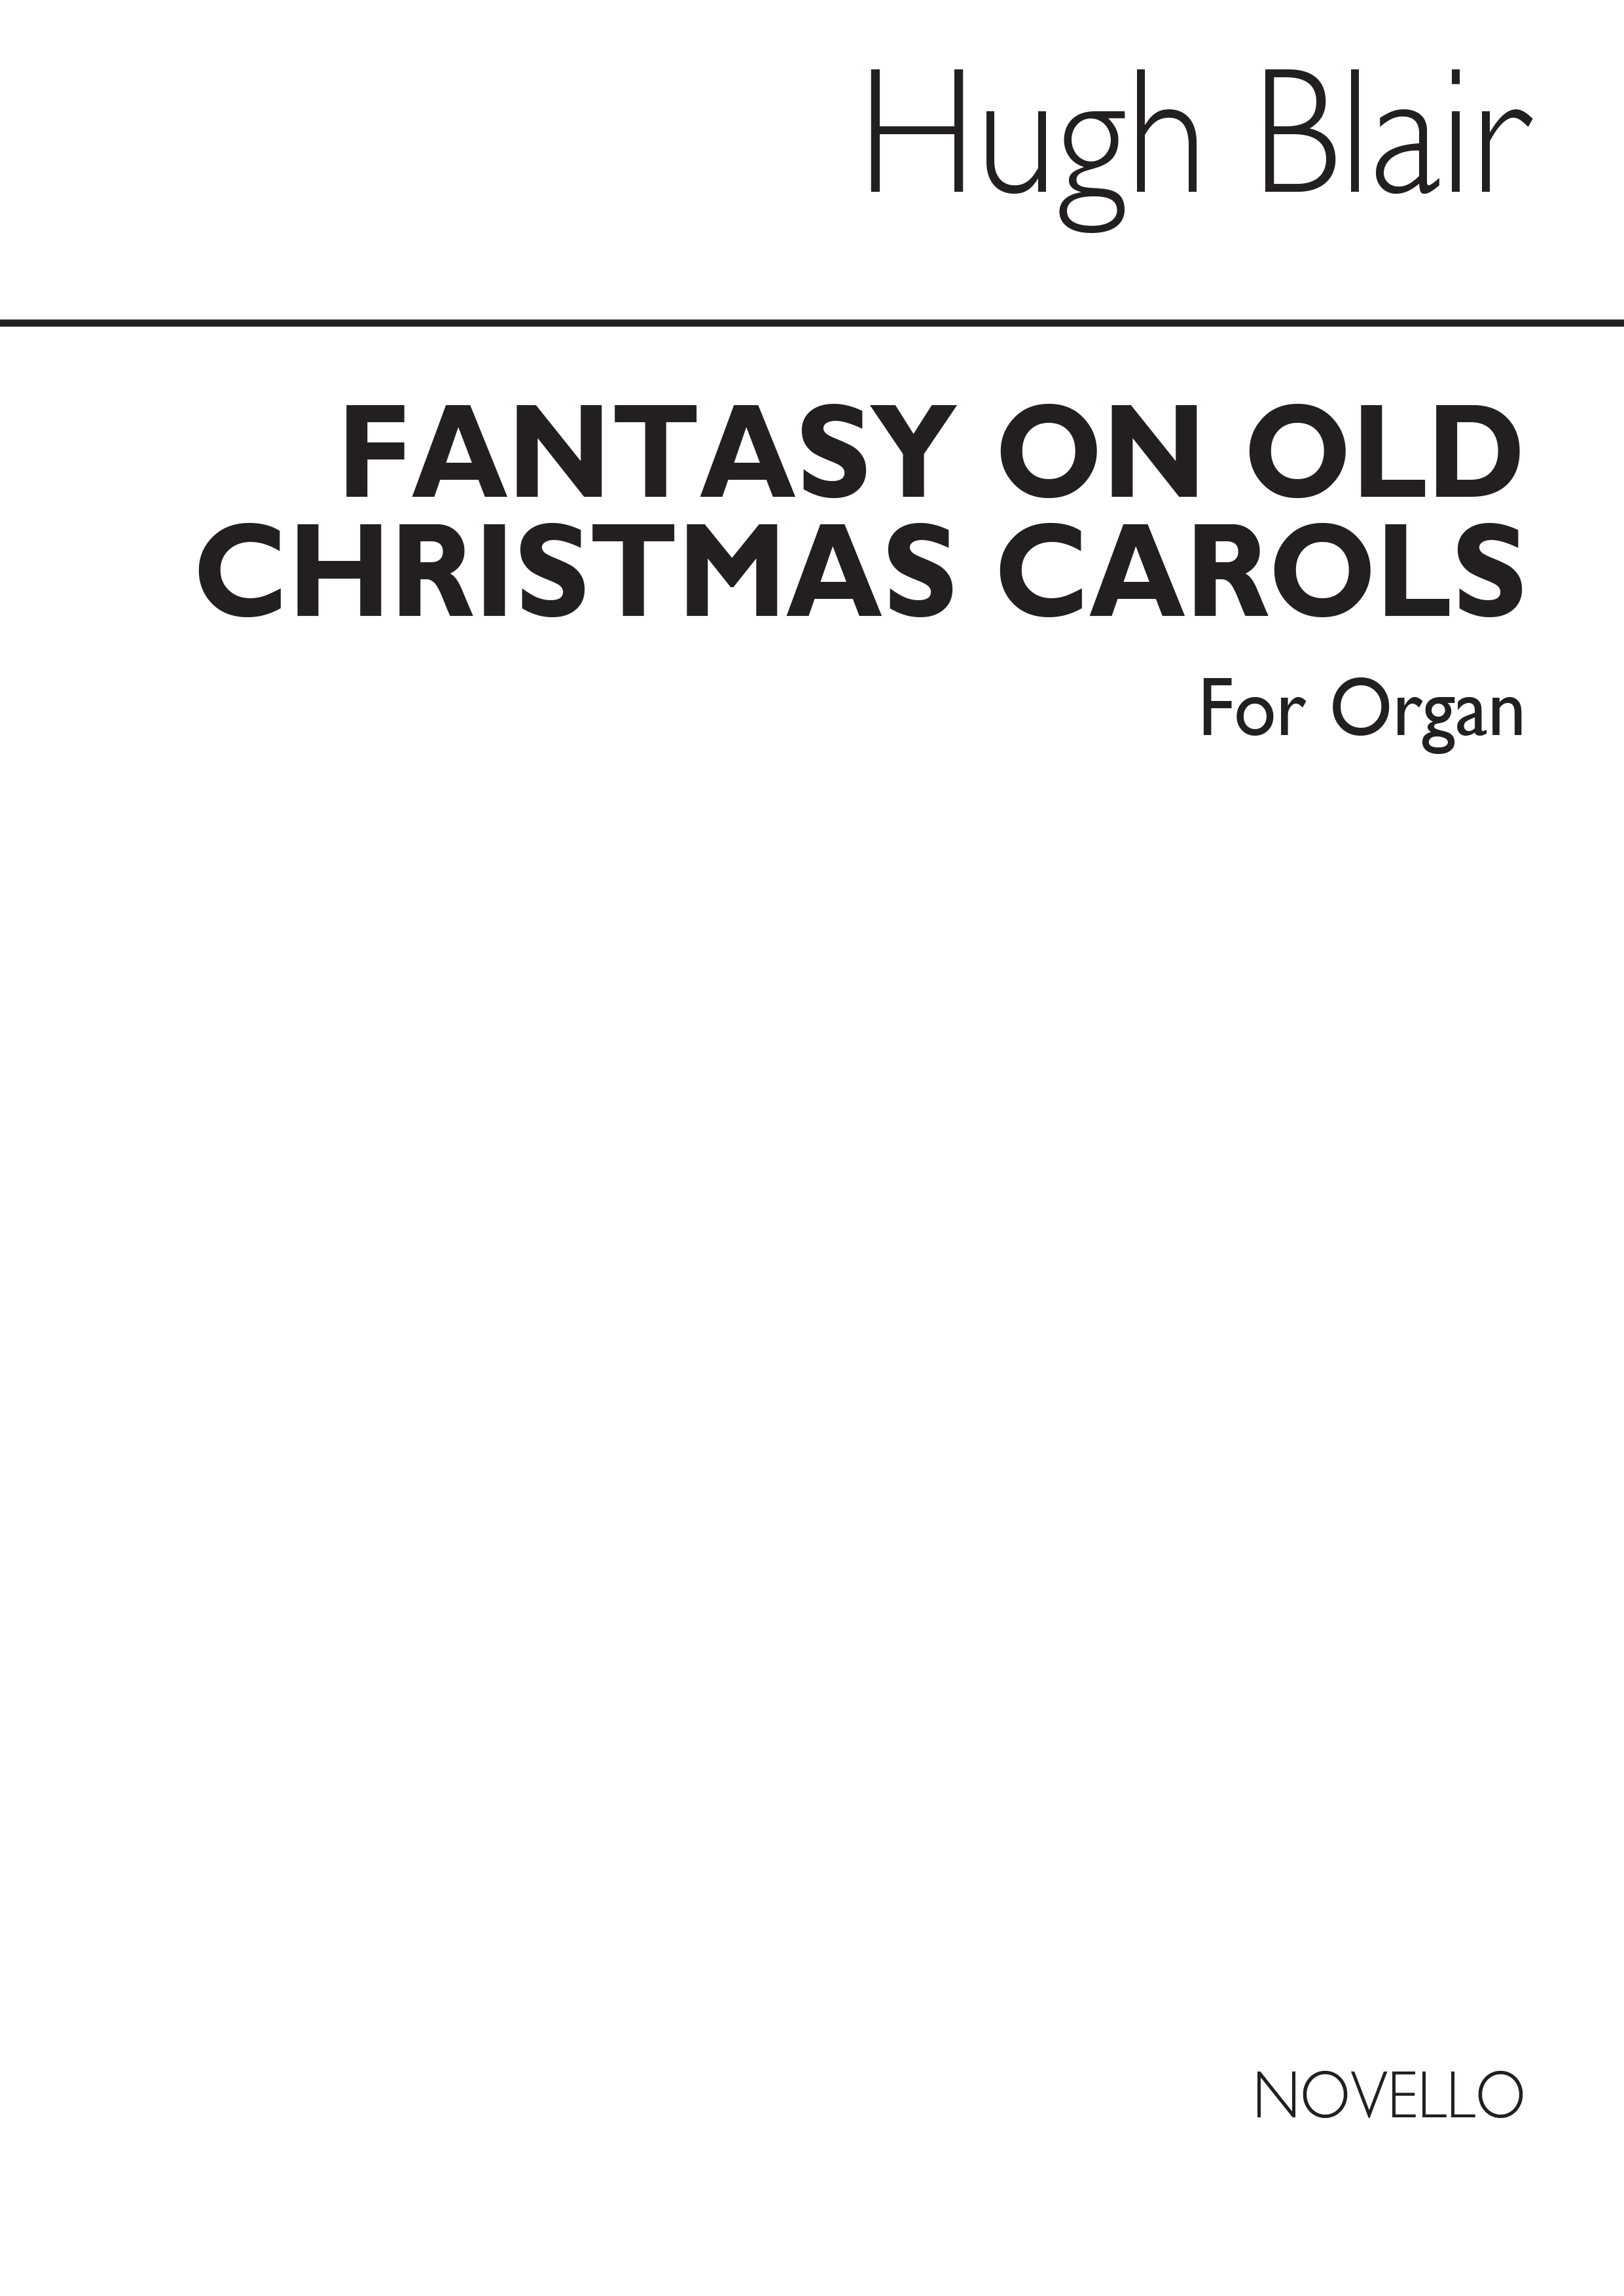 Hugh Blair: Fantasy On Christmas Carols